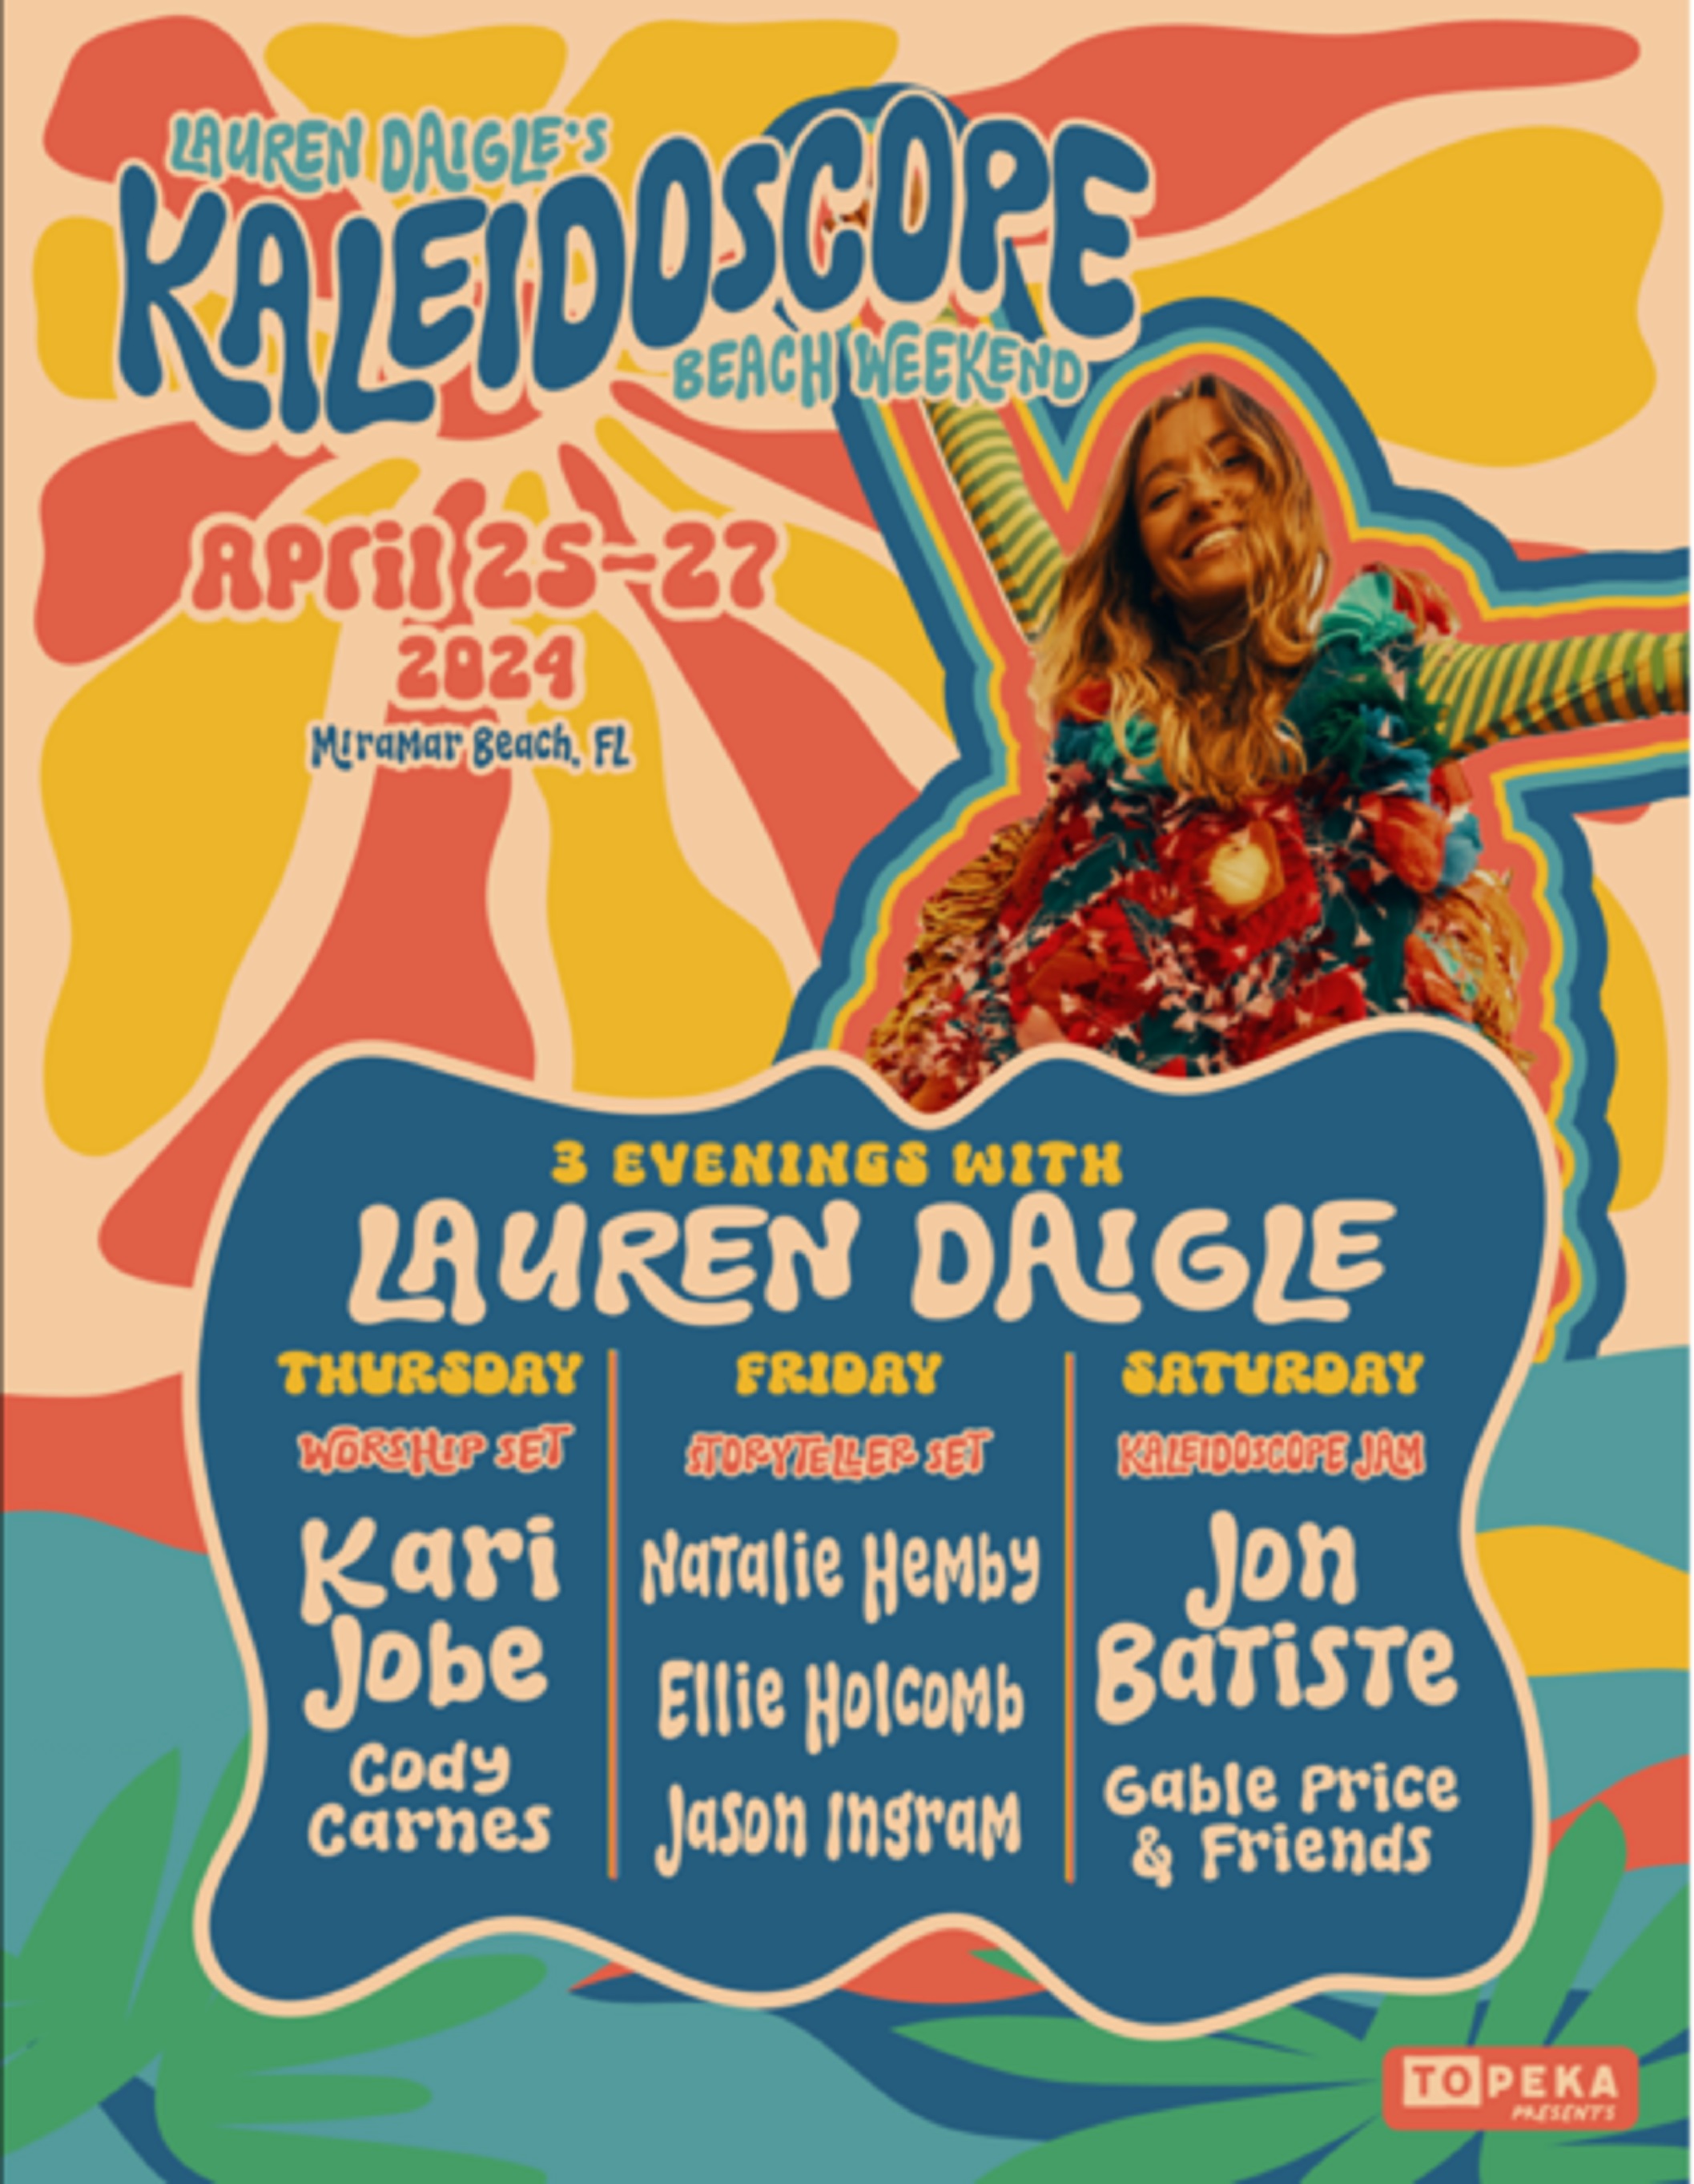 Topeka Presents Lauren Daigle's "Kaleidoscope Beach Weekend" Music Vacation, April 25-27